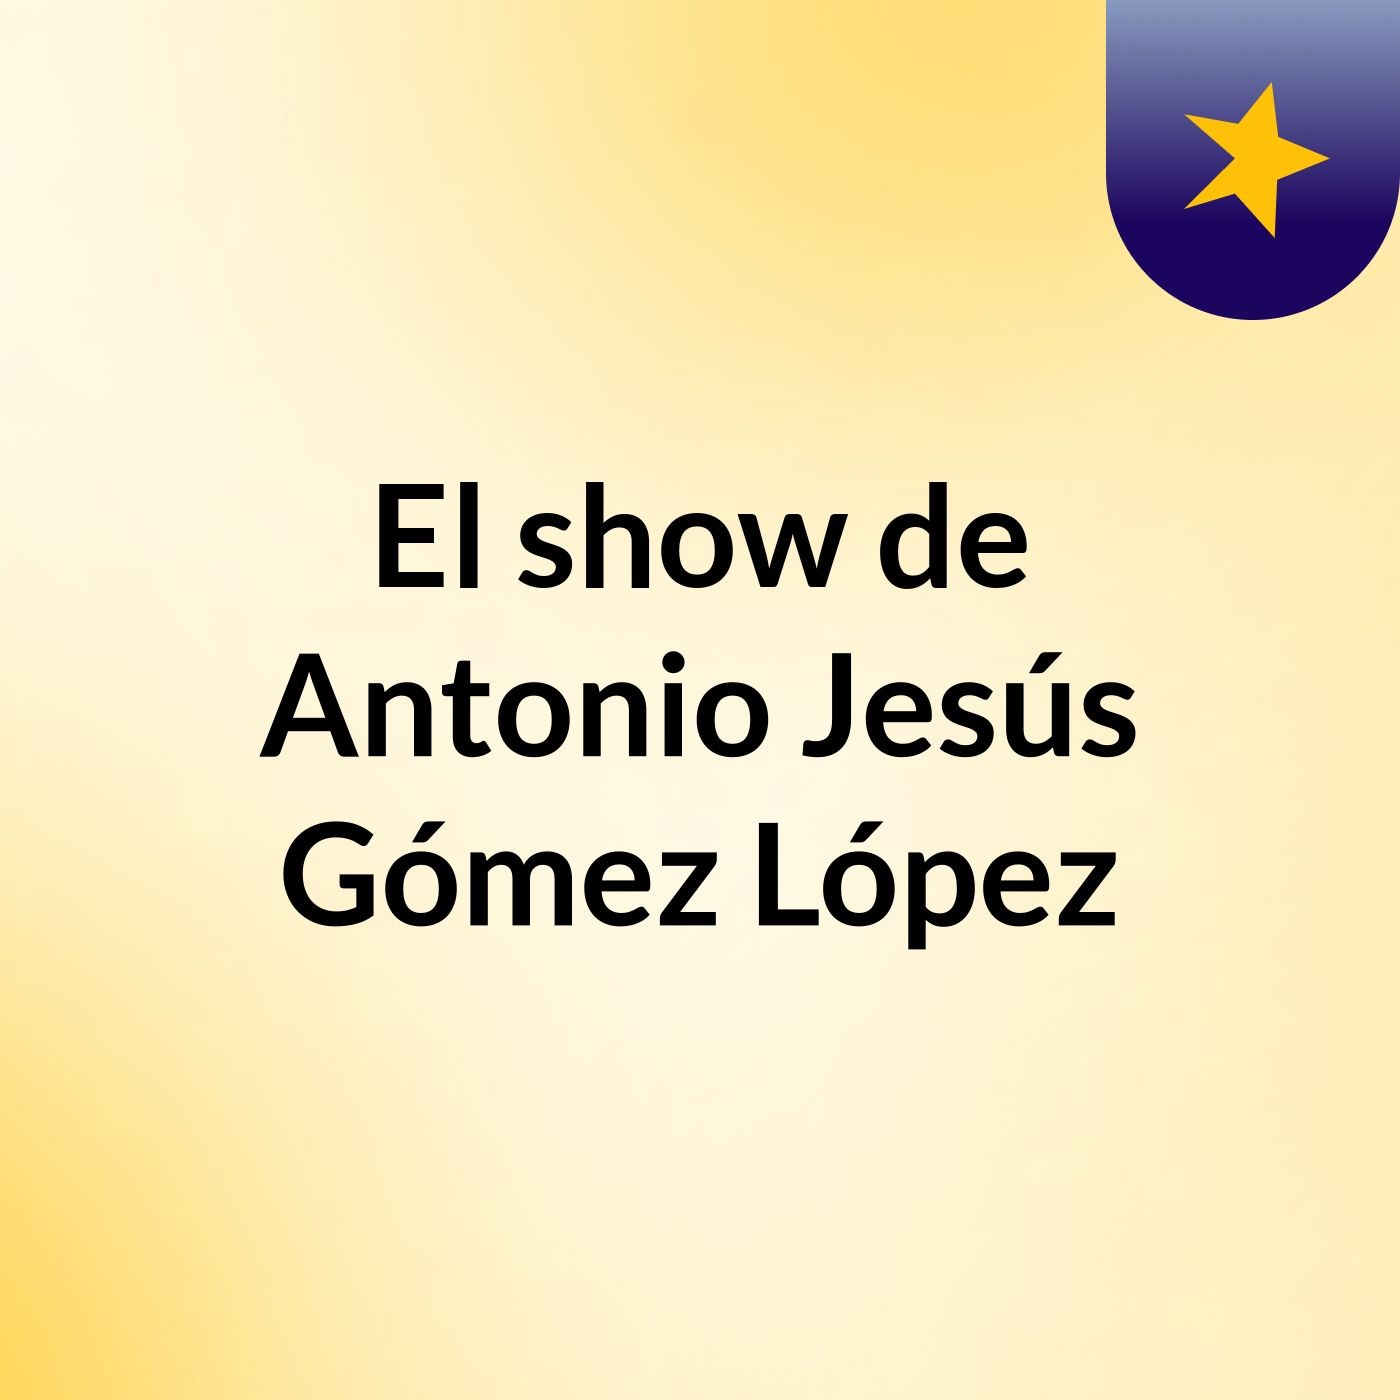 El show de Antonio Jesús Gómez López